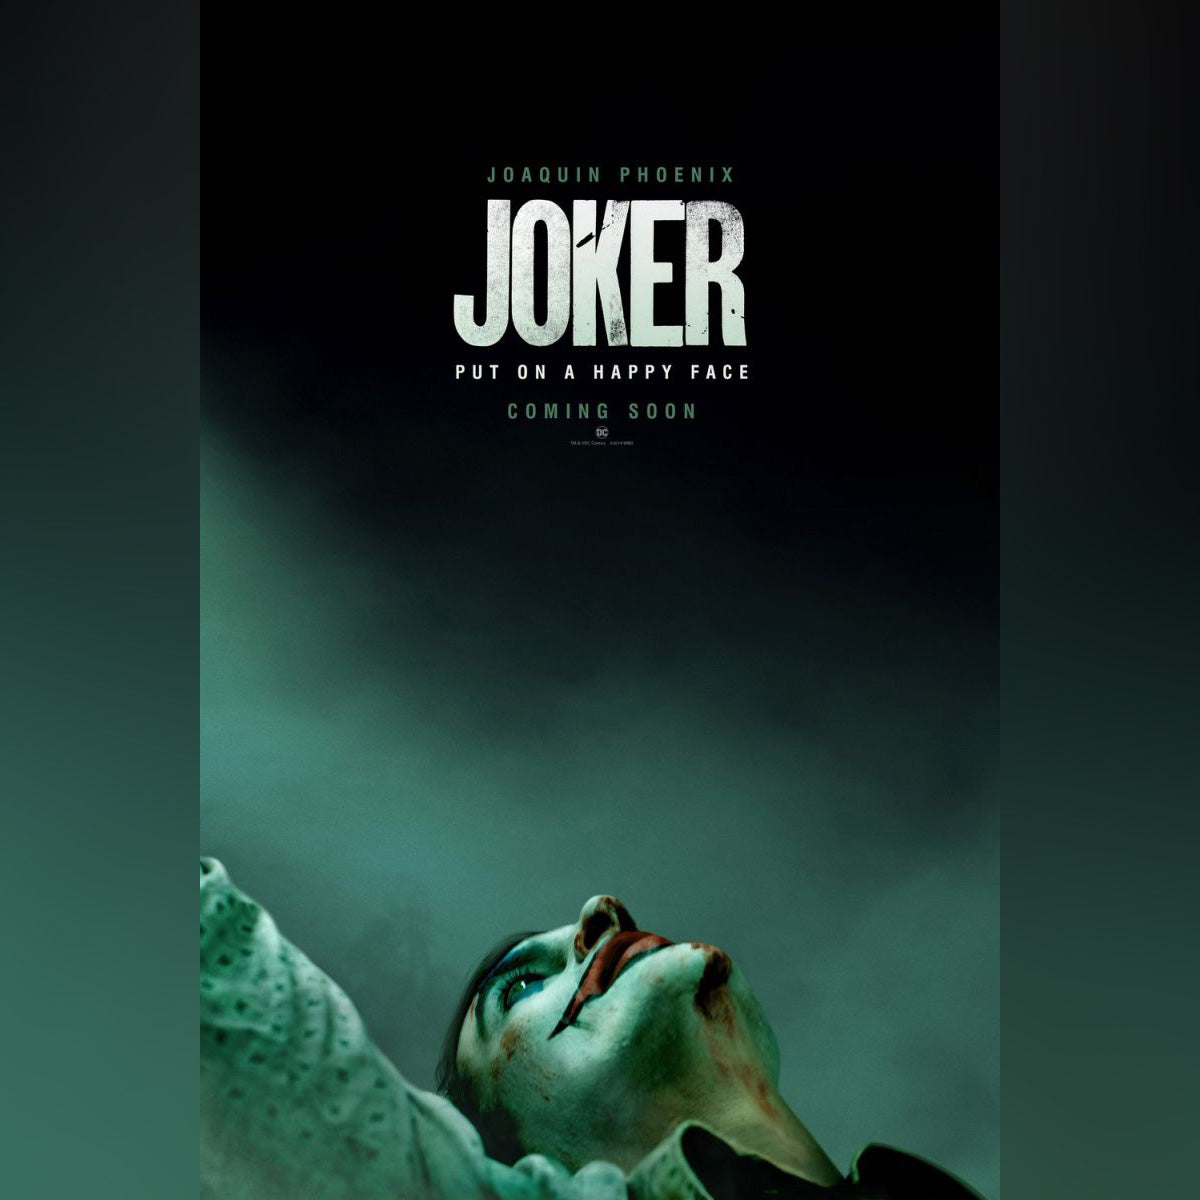 Original Movie Poster of Joker (2019)